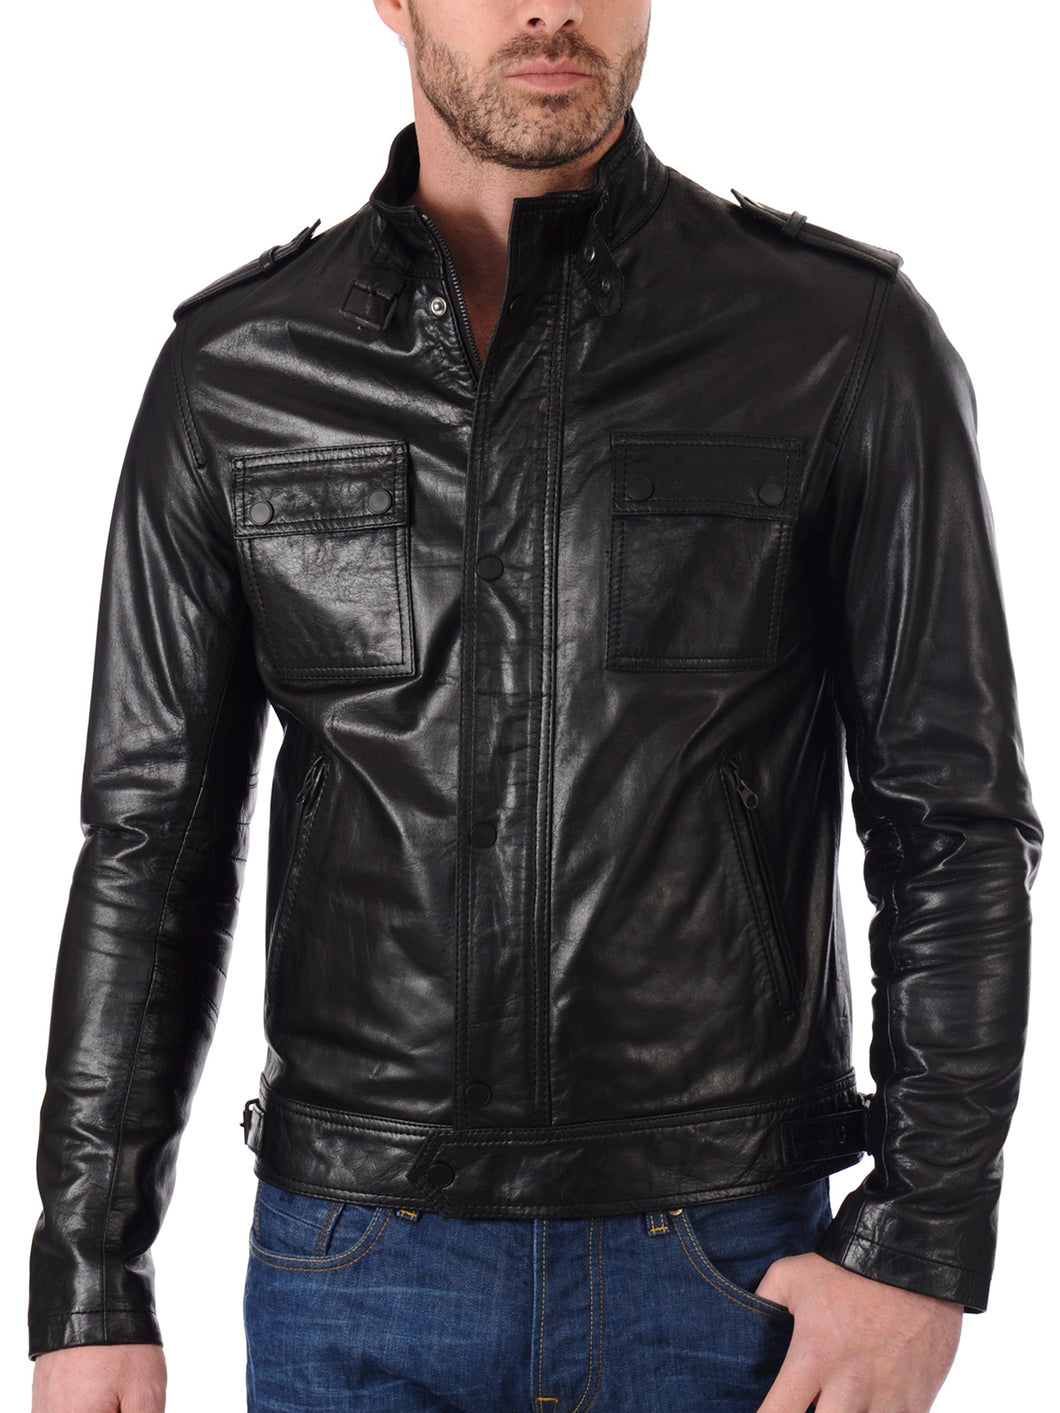 Mens Premium Black Distressed Motorcycle Leather Jacket